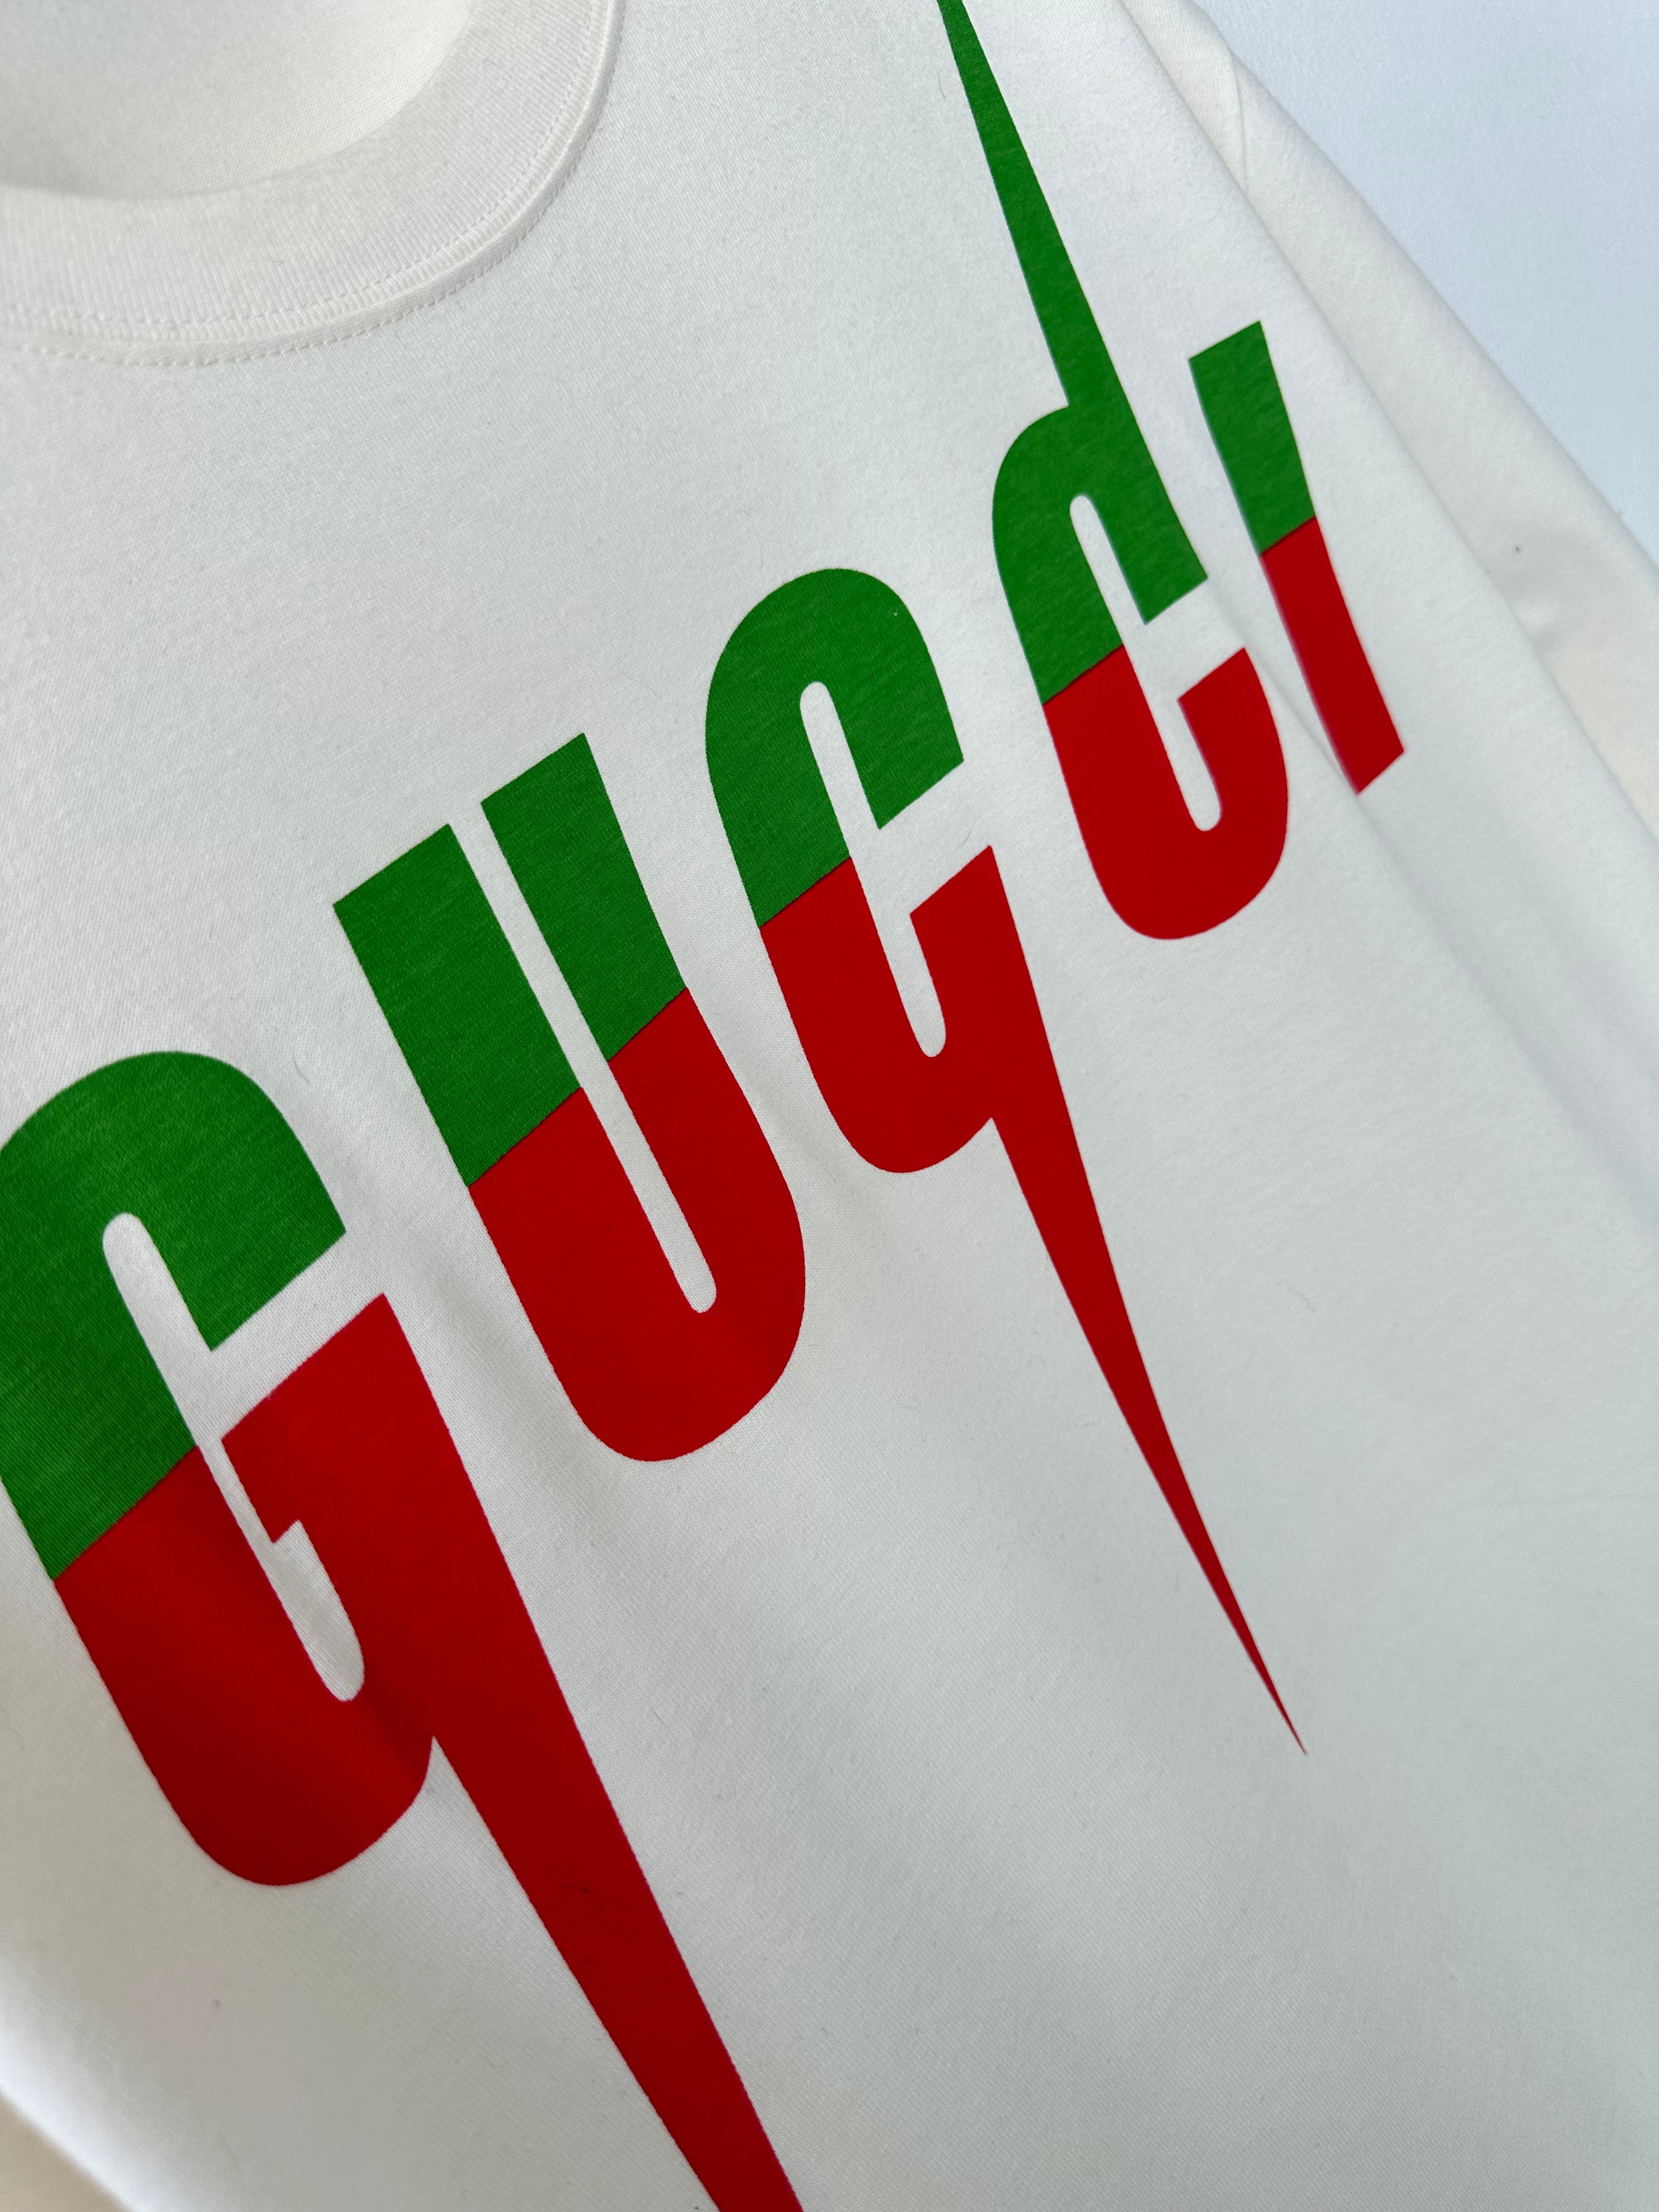 Gucci Blade T-shirt